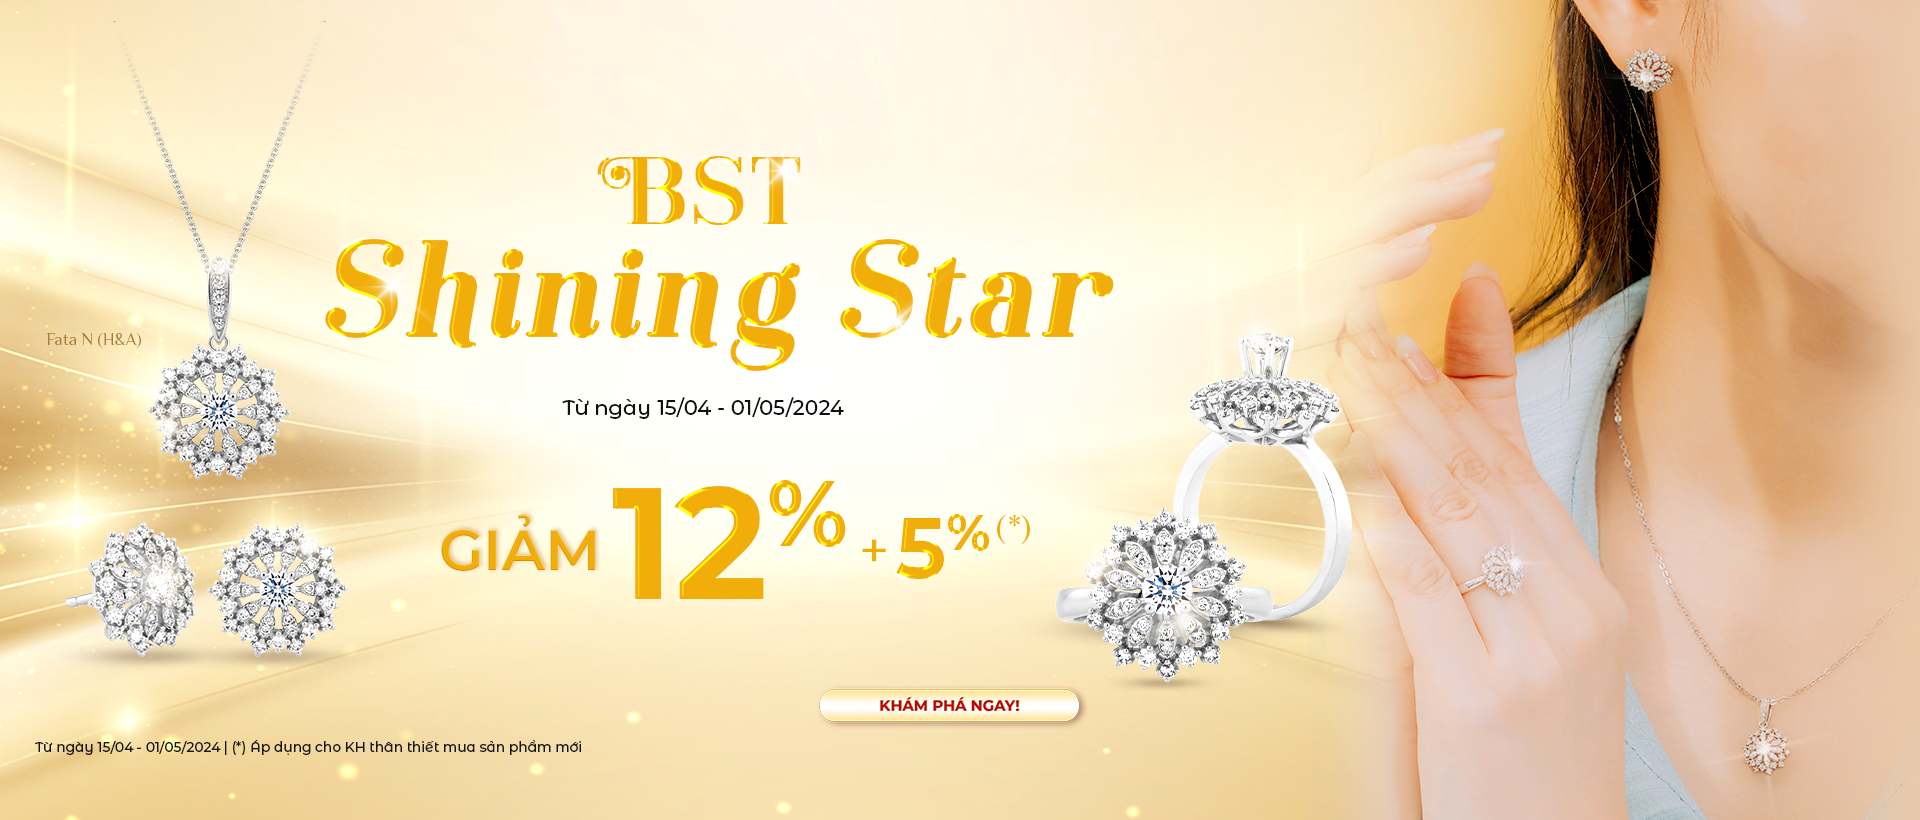 BST Shining Star